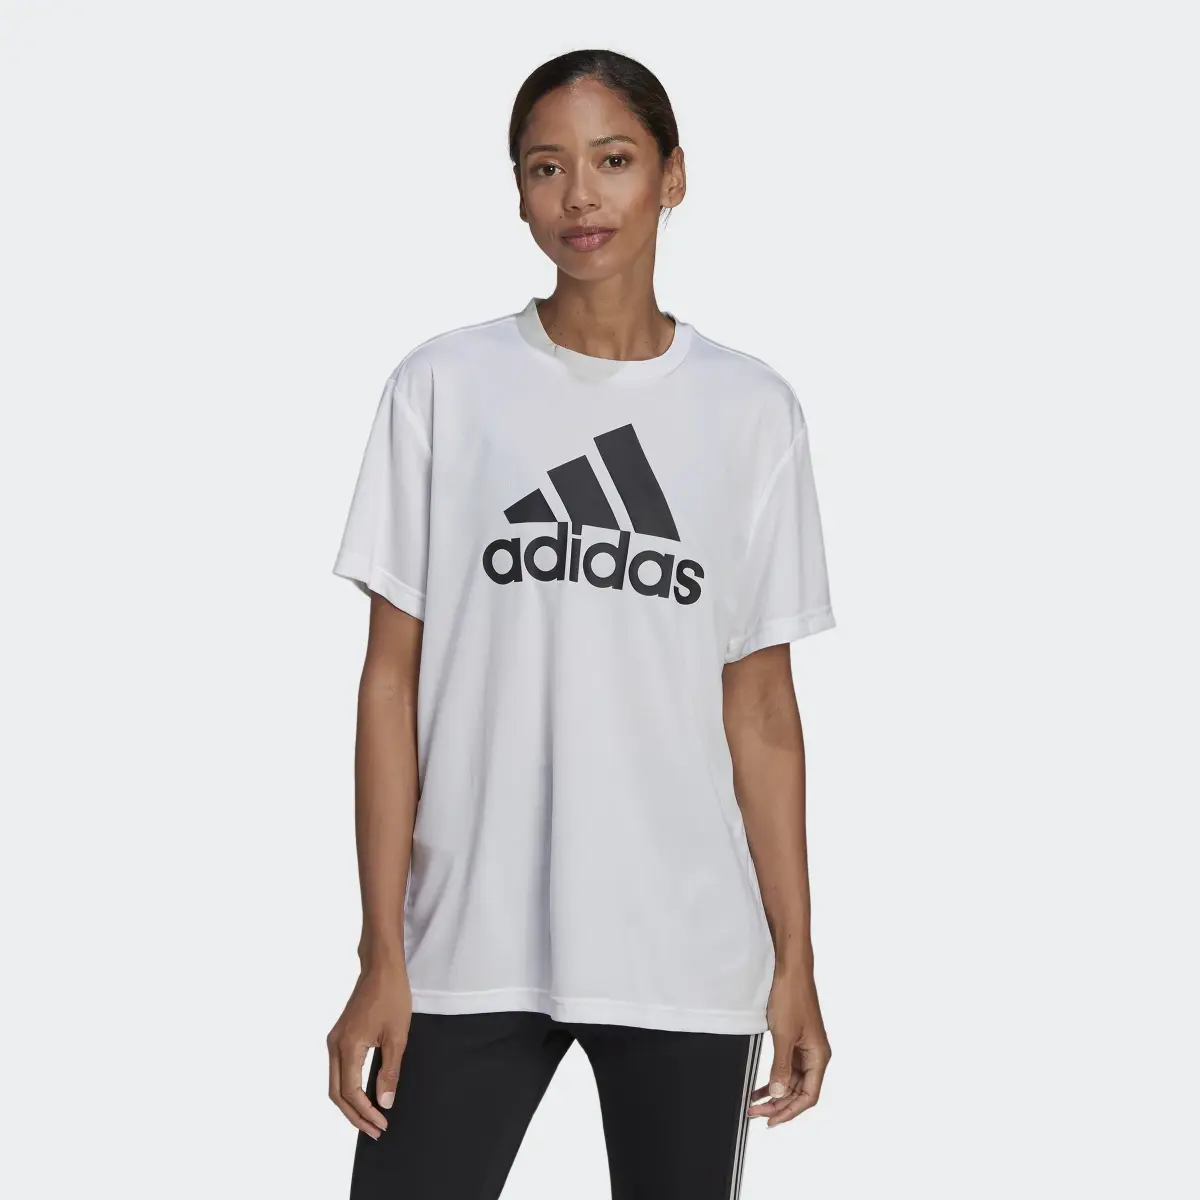 Adidas by Stella McCartney TrueStrength Yoga Crop Top. 2